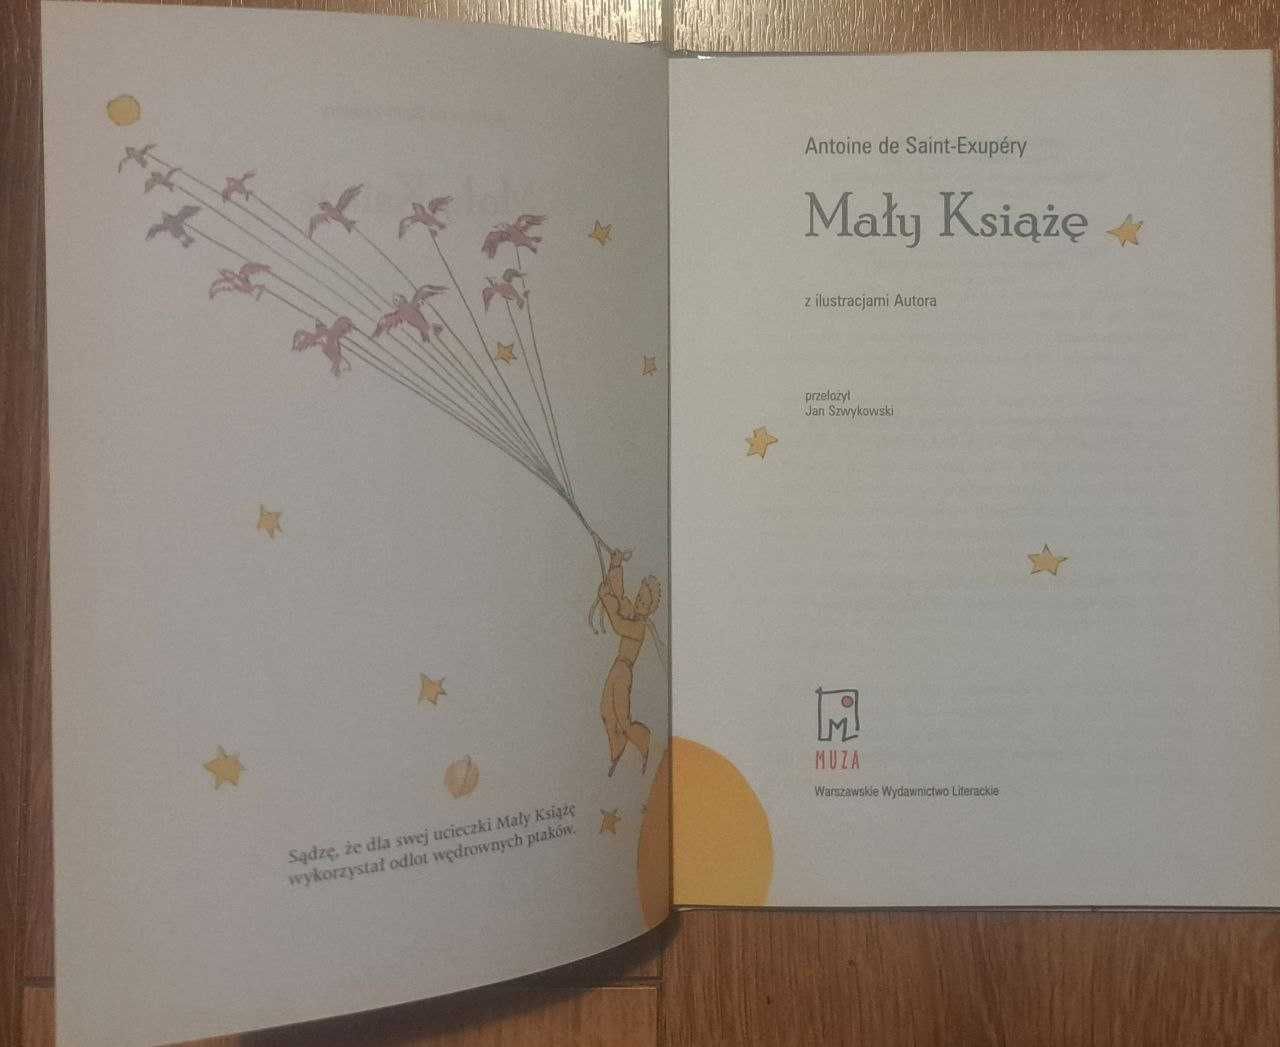 Maly Ksiaze (Polish Edition)
Antoine De Saint-Exupery